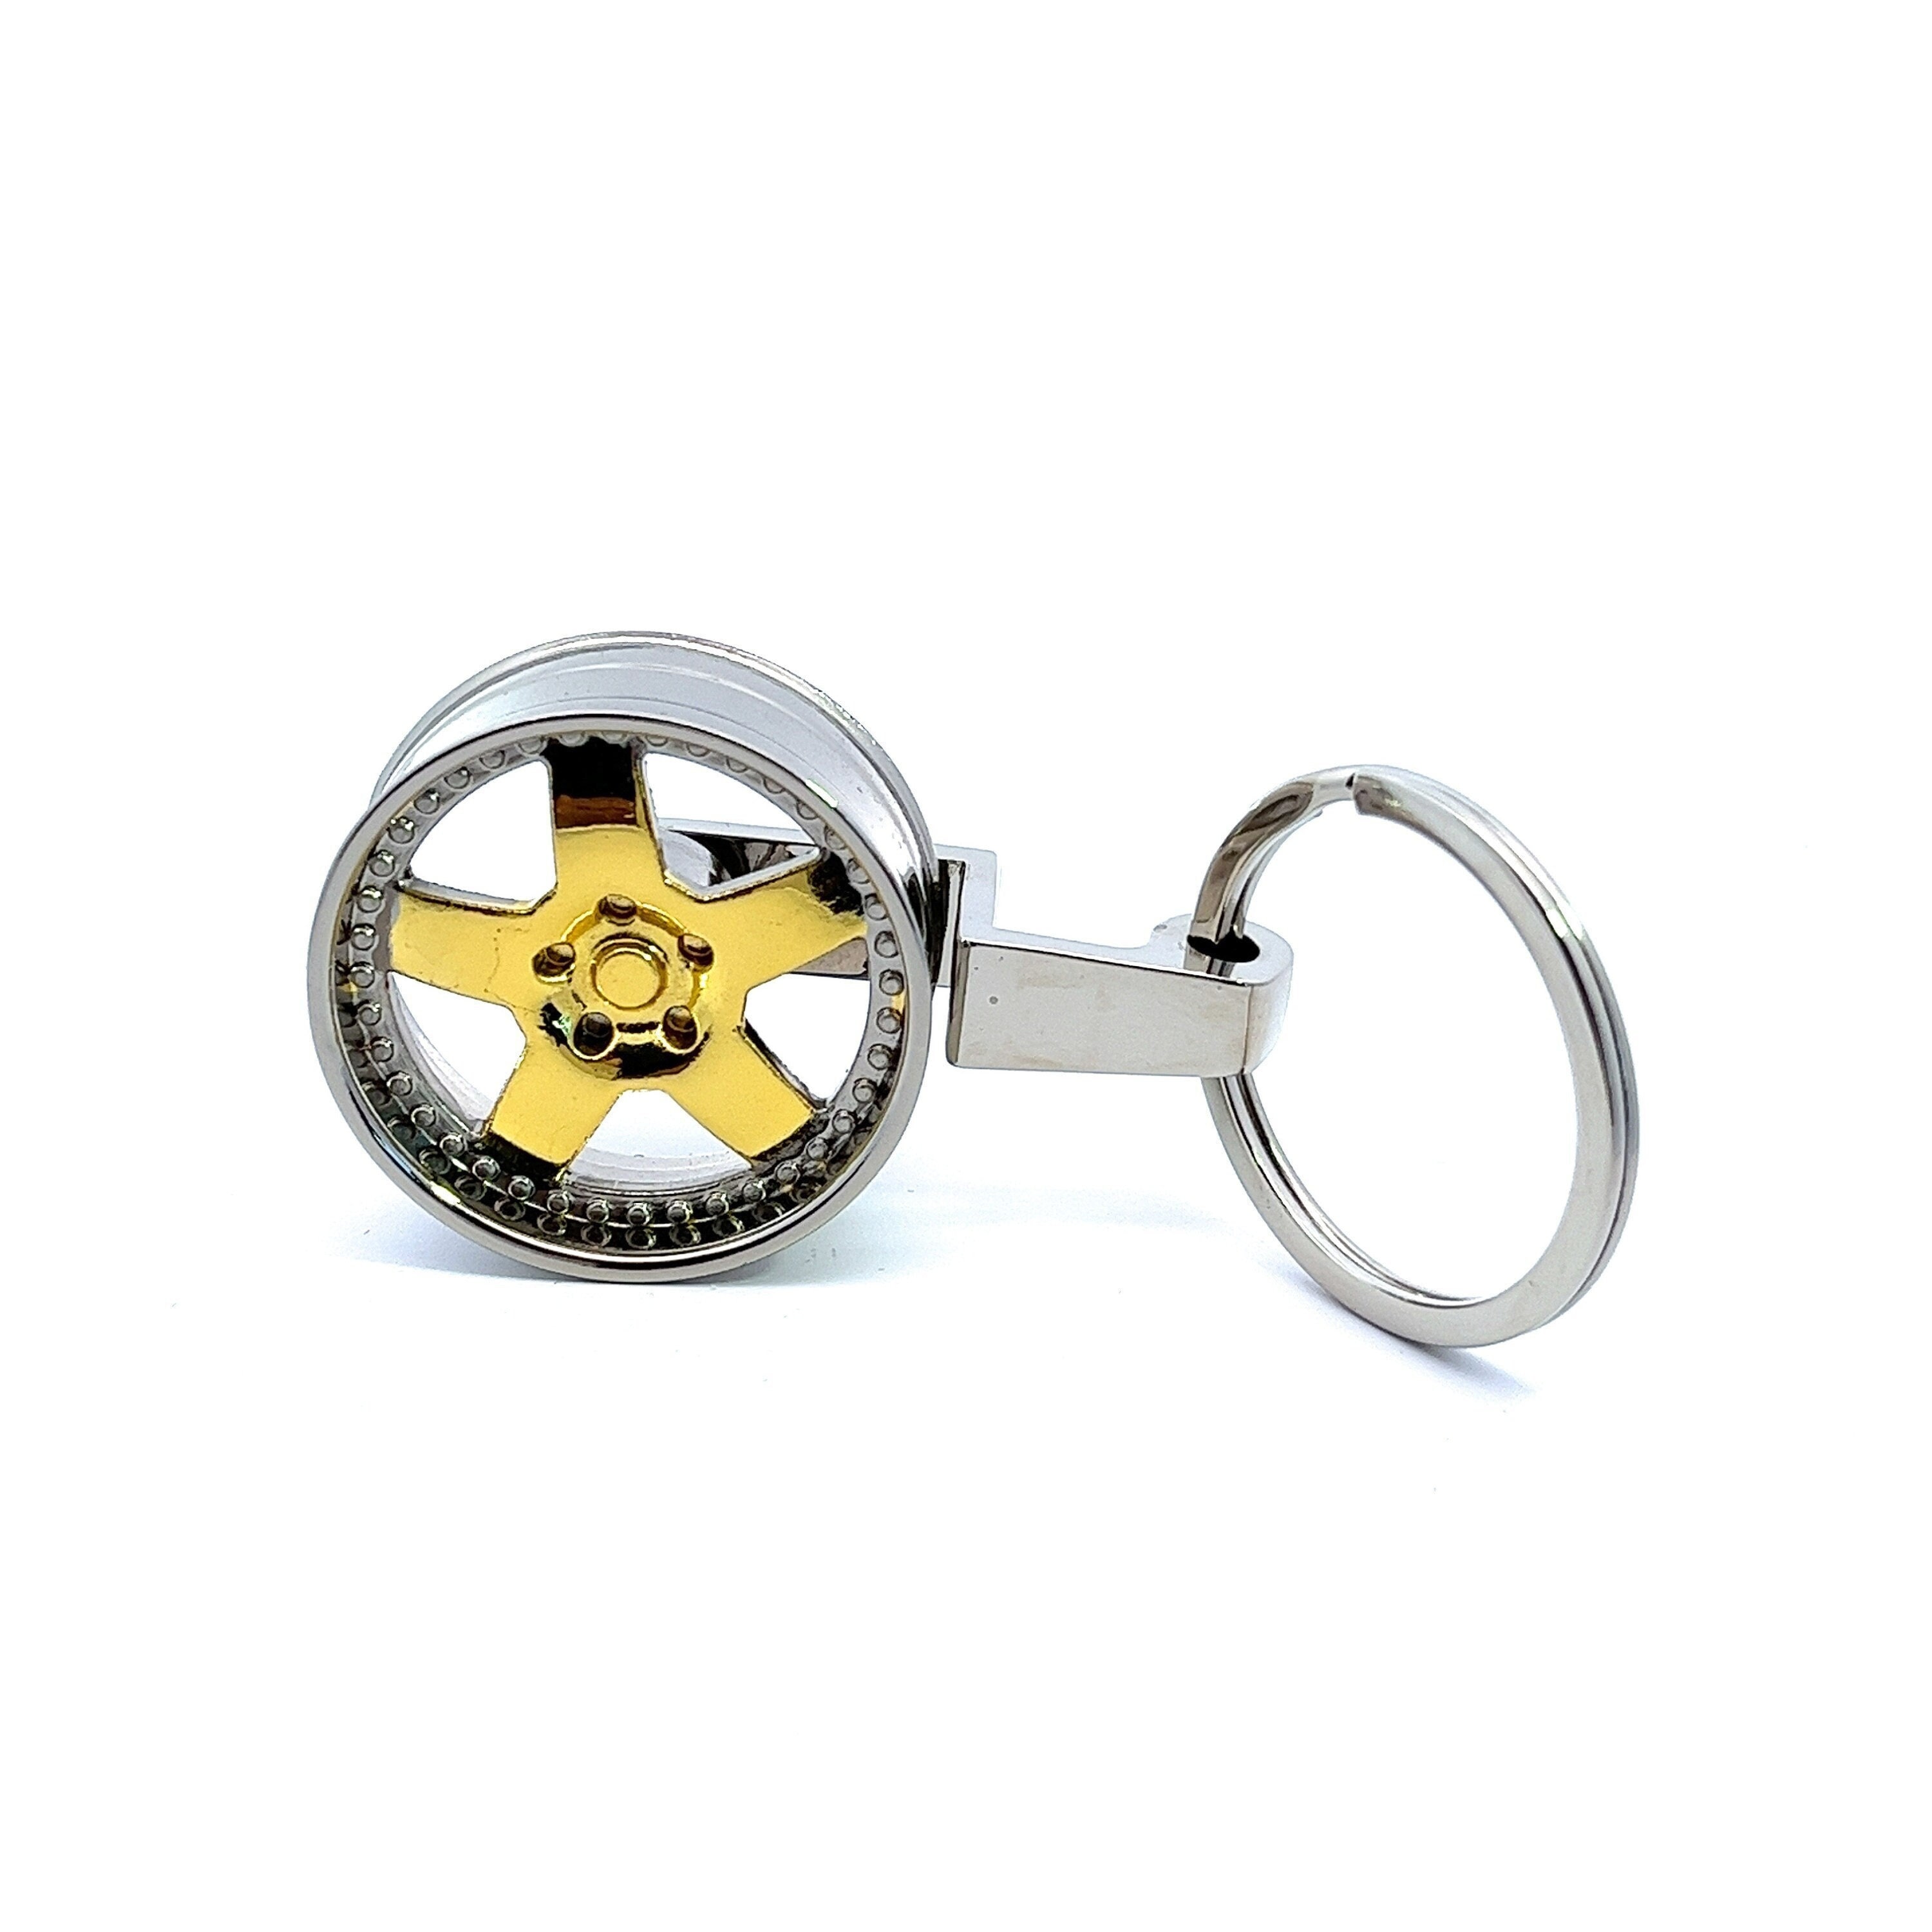 Gear Spool - KeySpinner Key Ring Spinning Keychain Spinner Fidget Toy for  Your Keys CNC Milled from Aluminum by Gear Spool